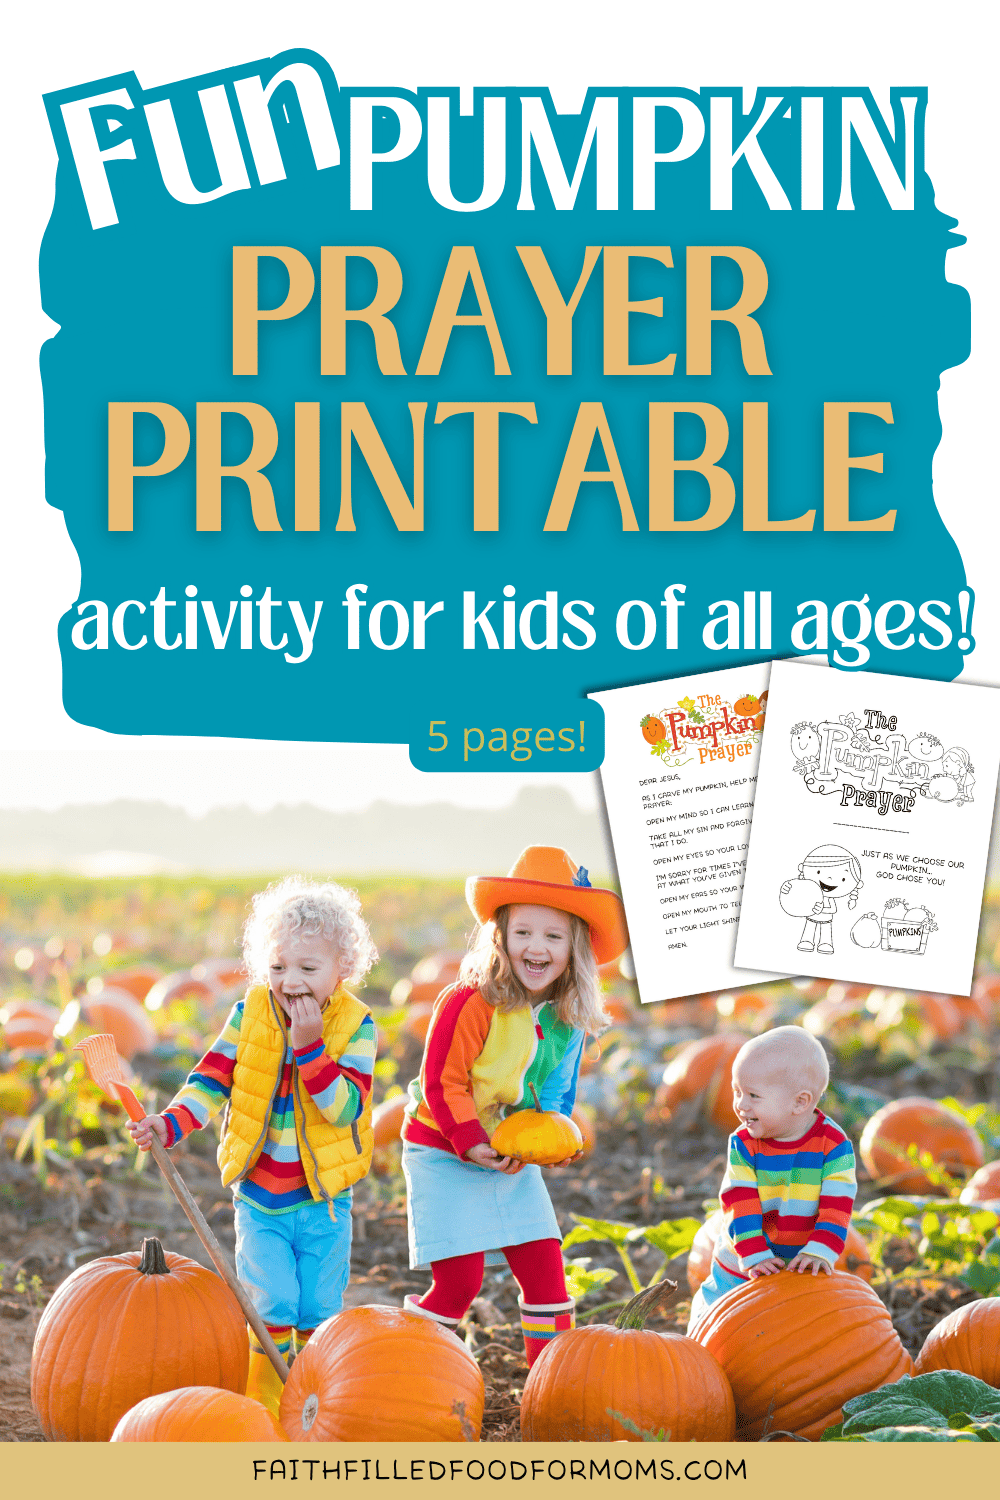 Fun pumpkin prayer printable activity for kids free â faith filled food for moms